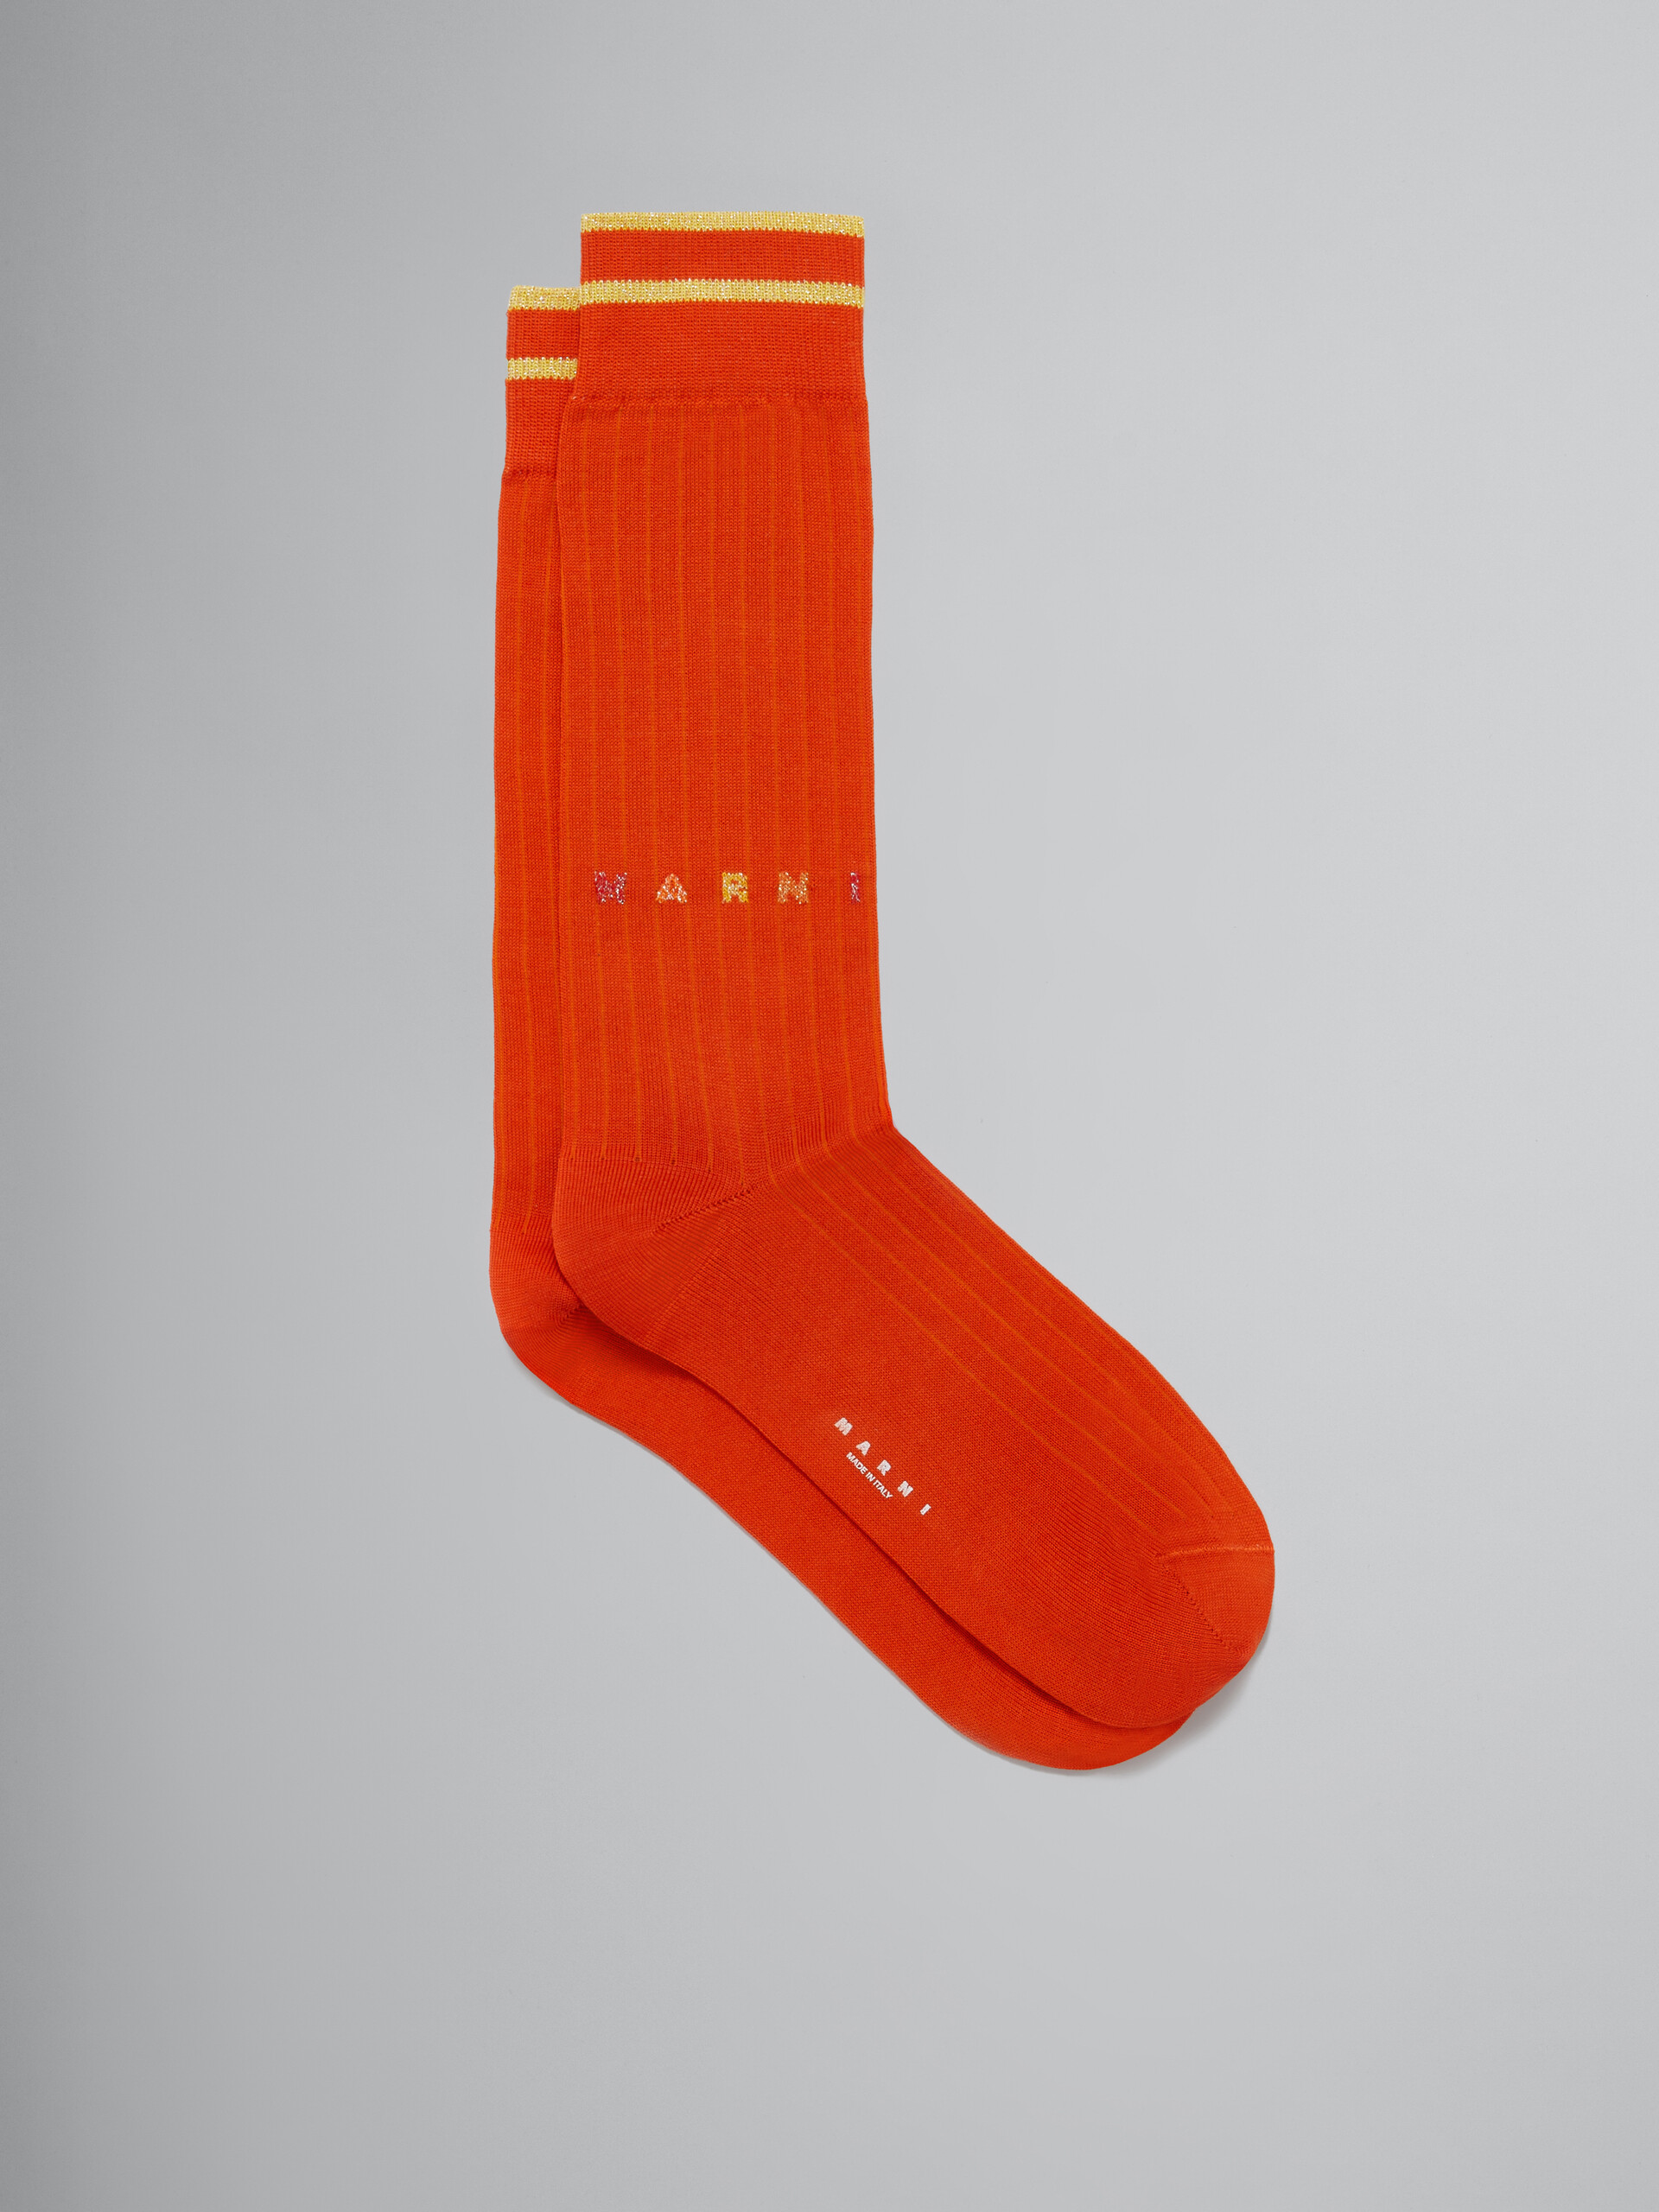 Red cotton socks with Lurex logo - Socks - Image 1